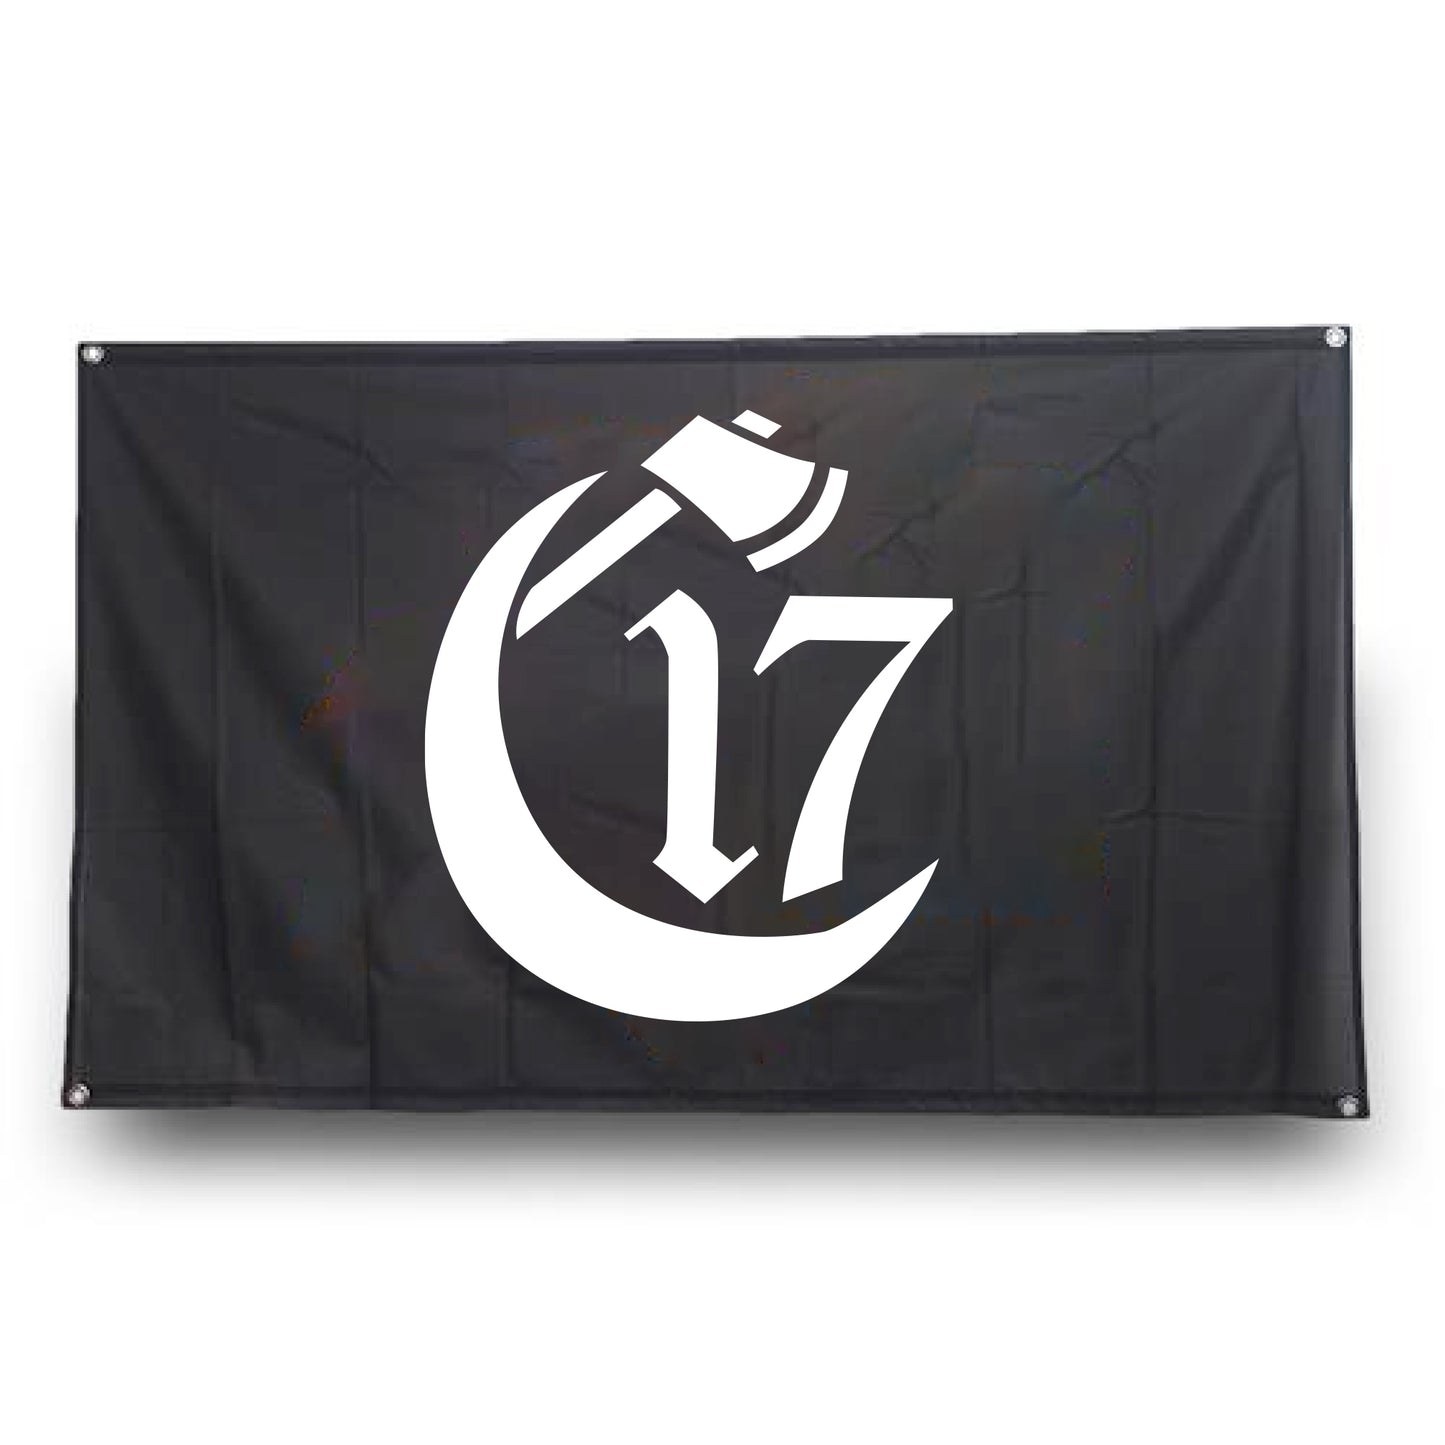 C17 - 5' x 3' Black Flag